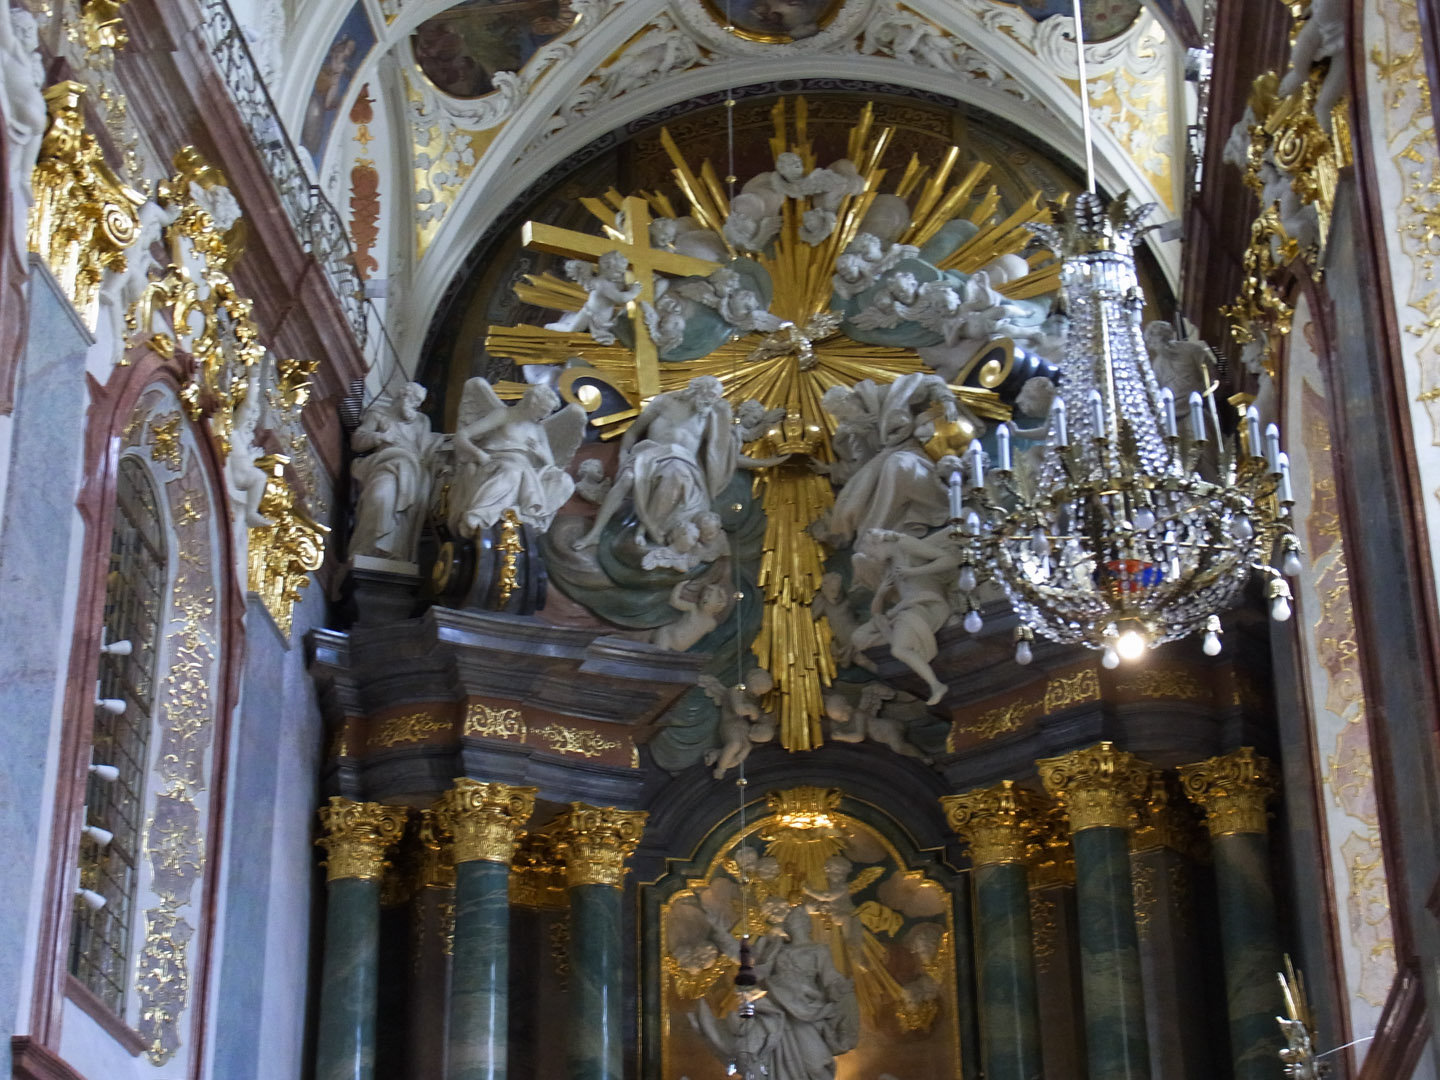 Inside the main basilica